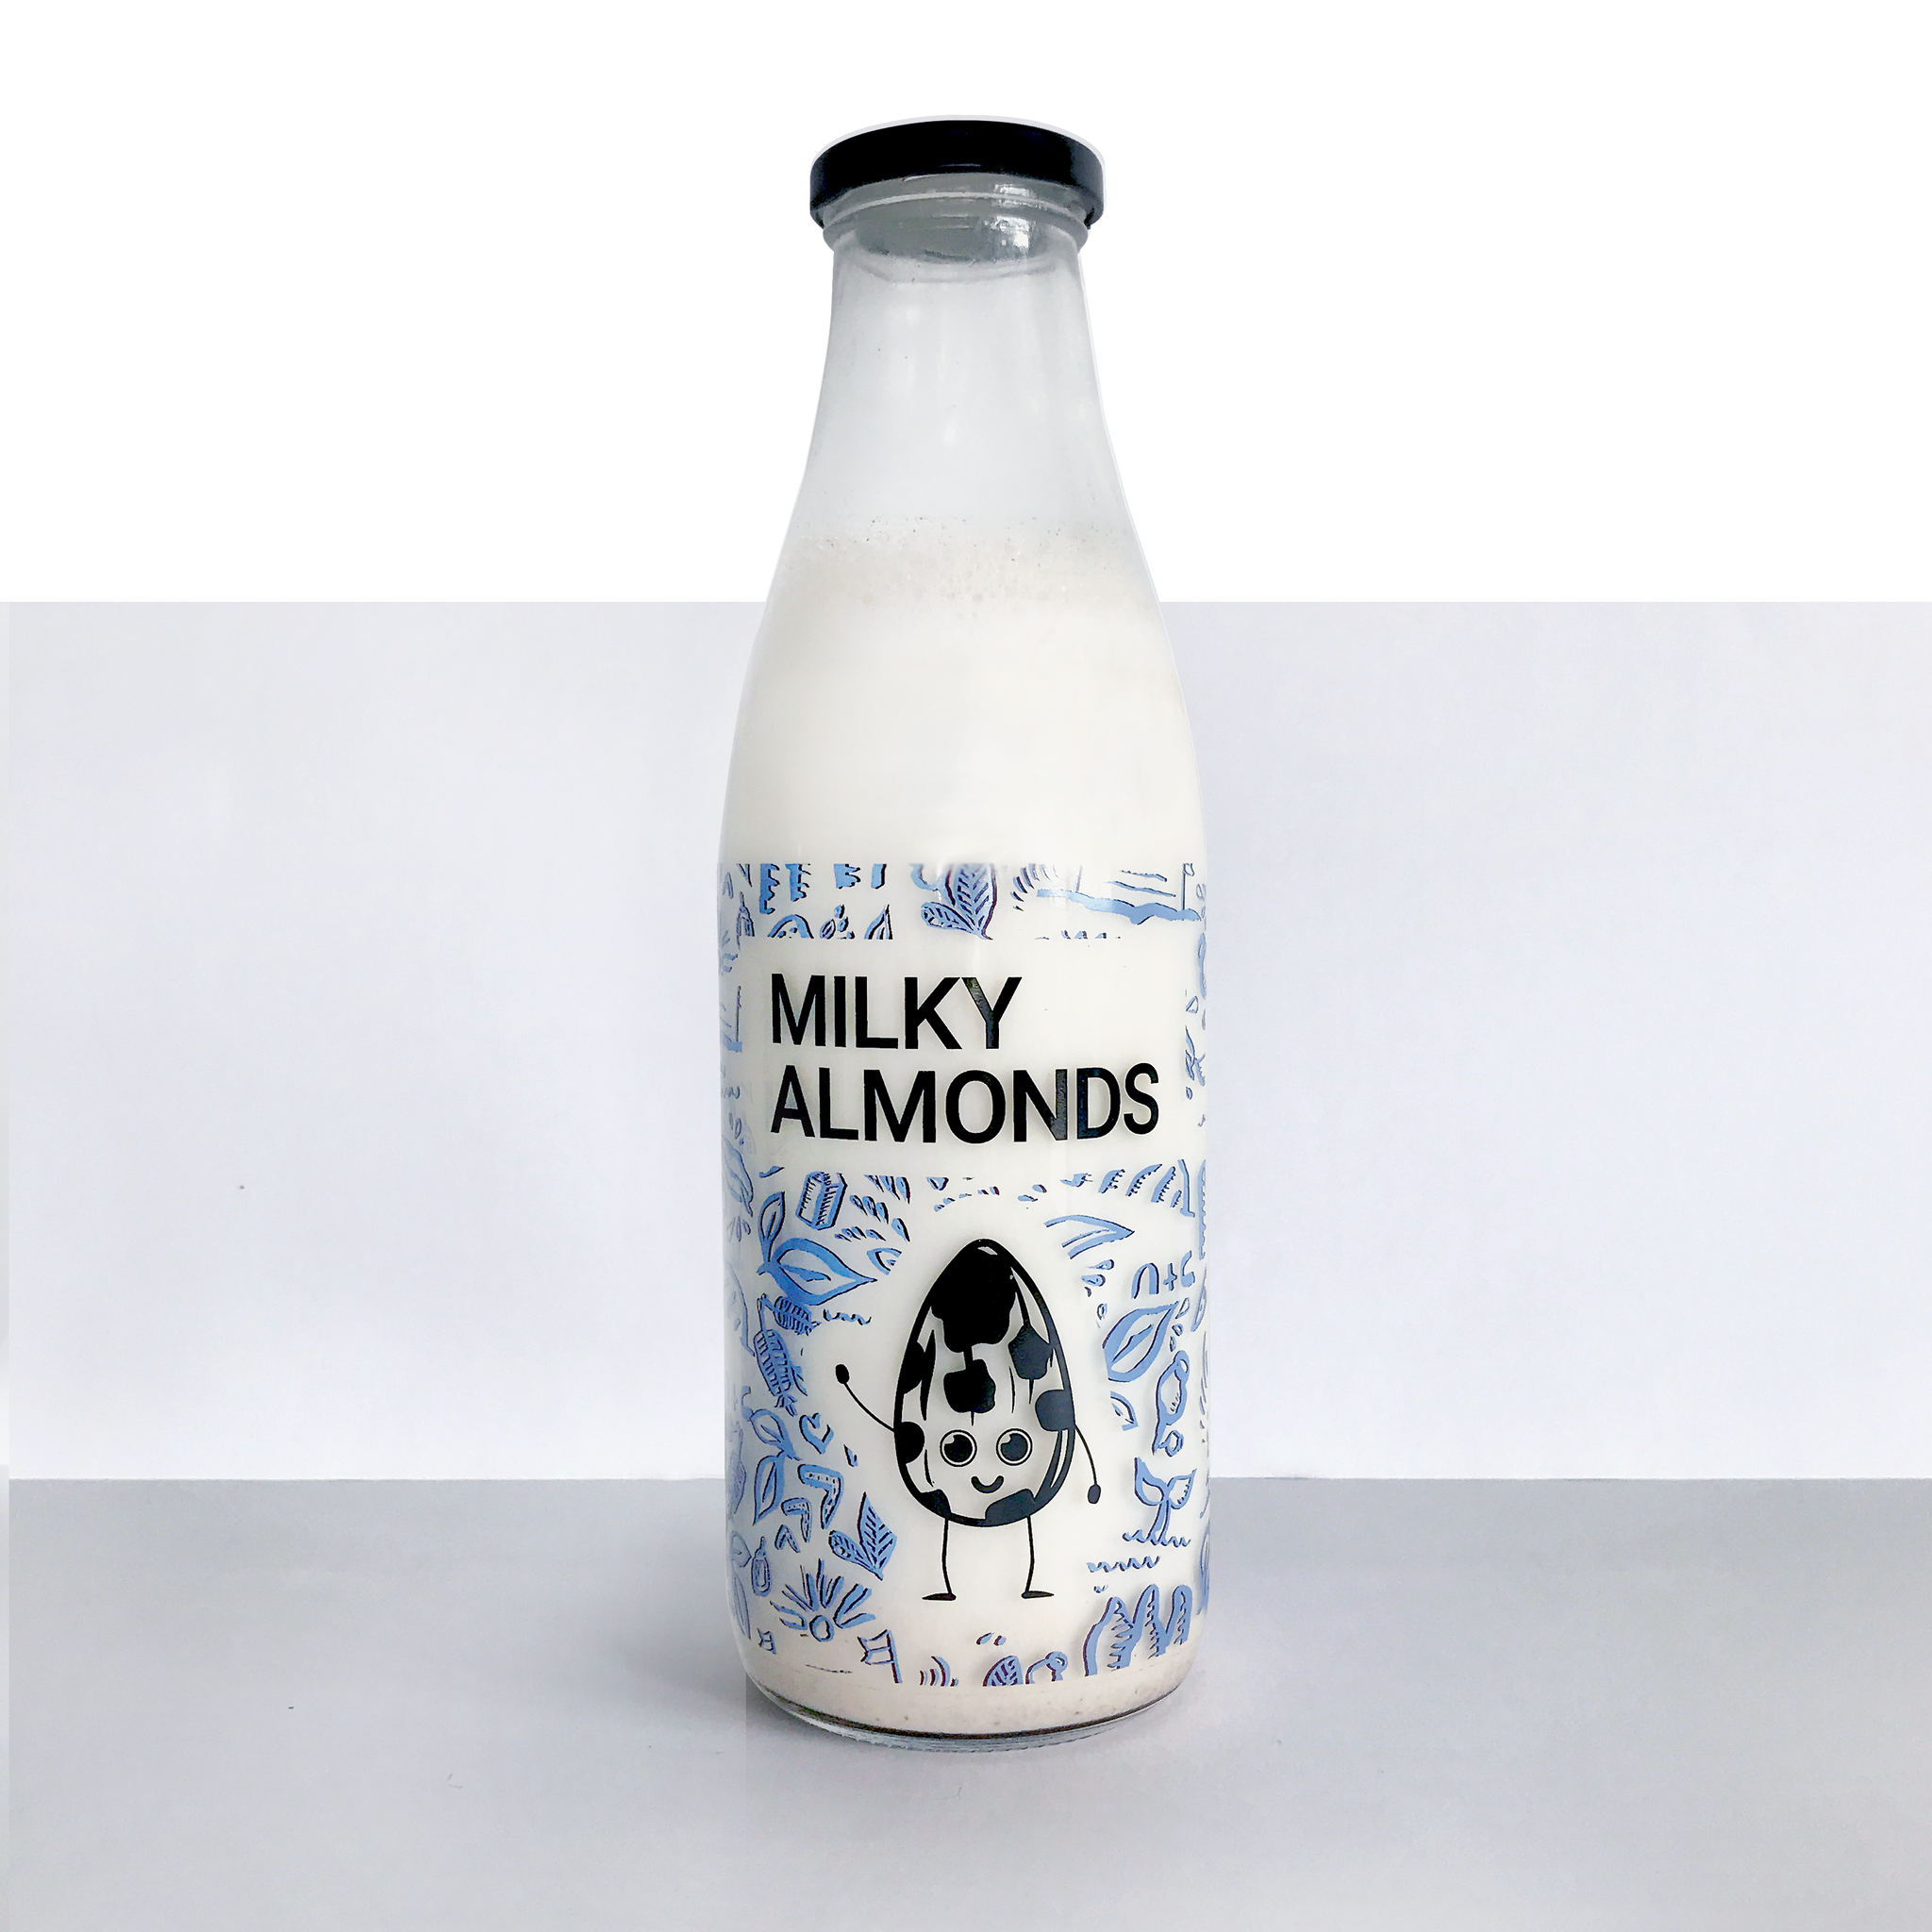 1L Glass Milk Bottle